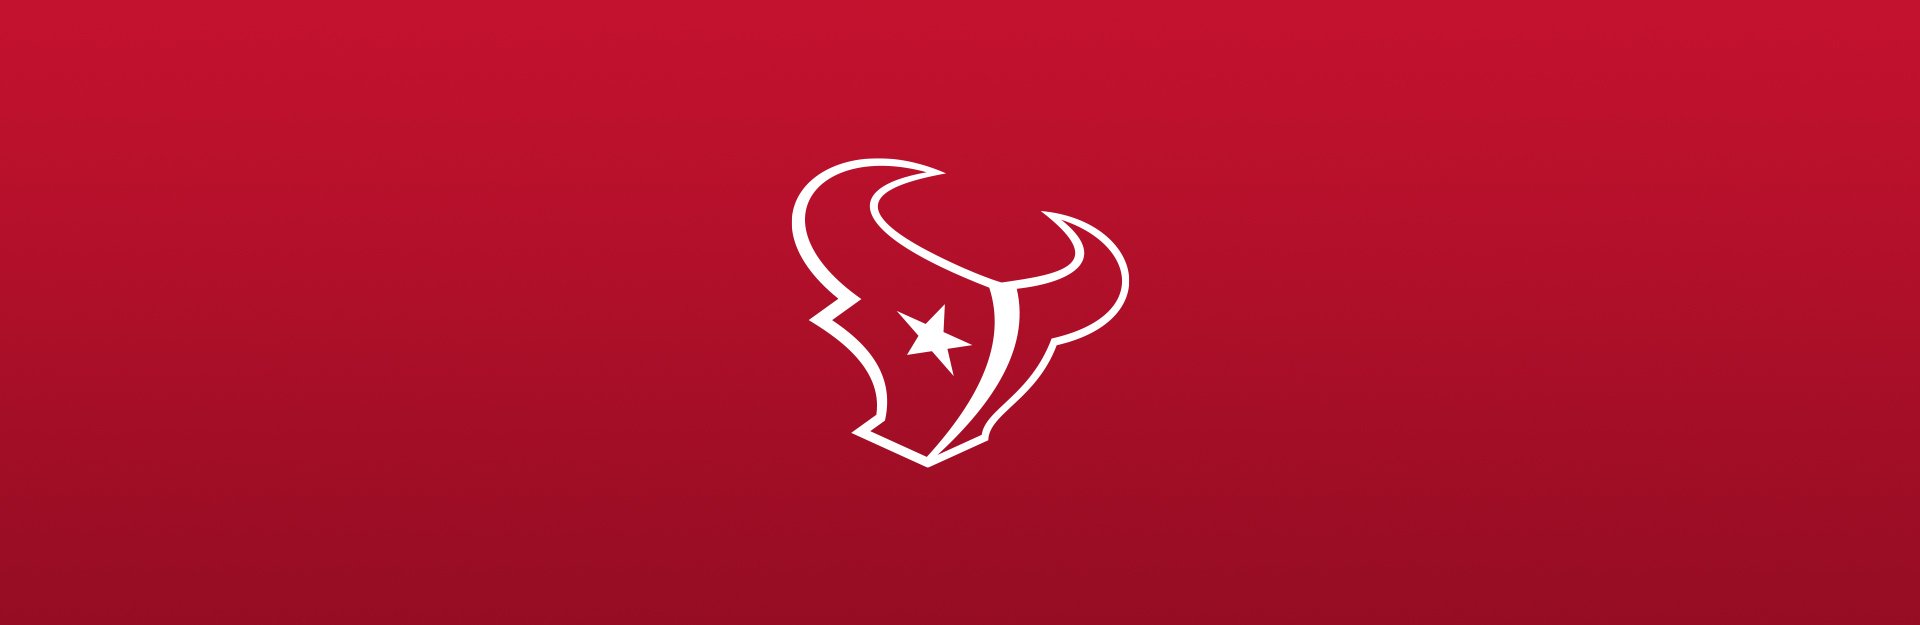 Houston Texans logo on red background